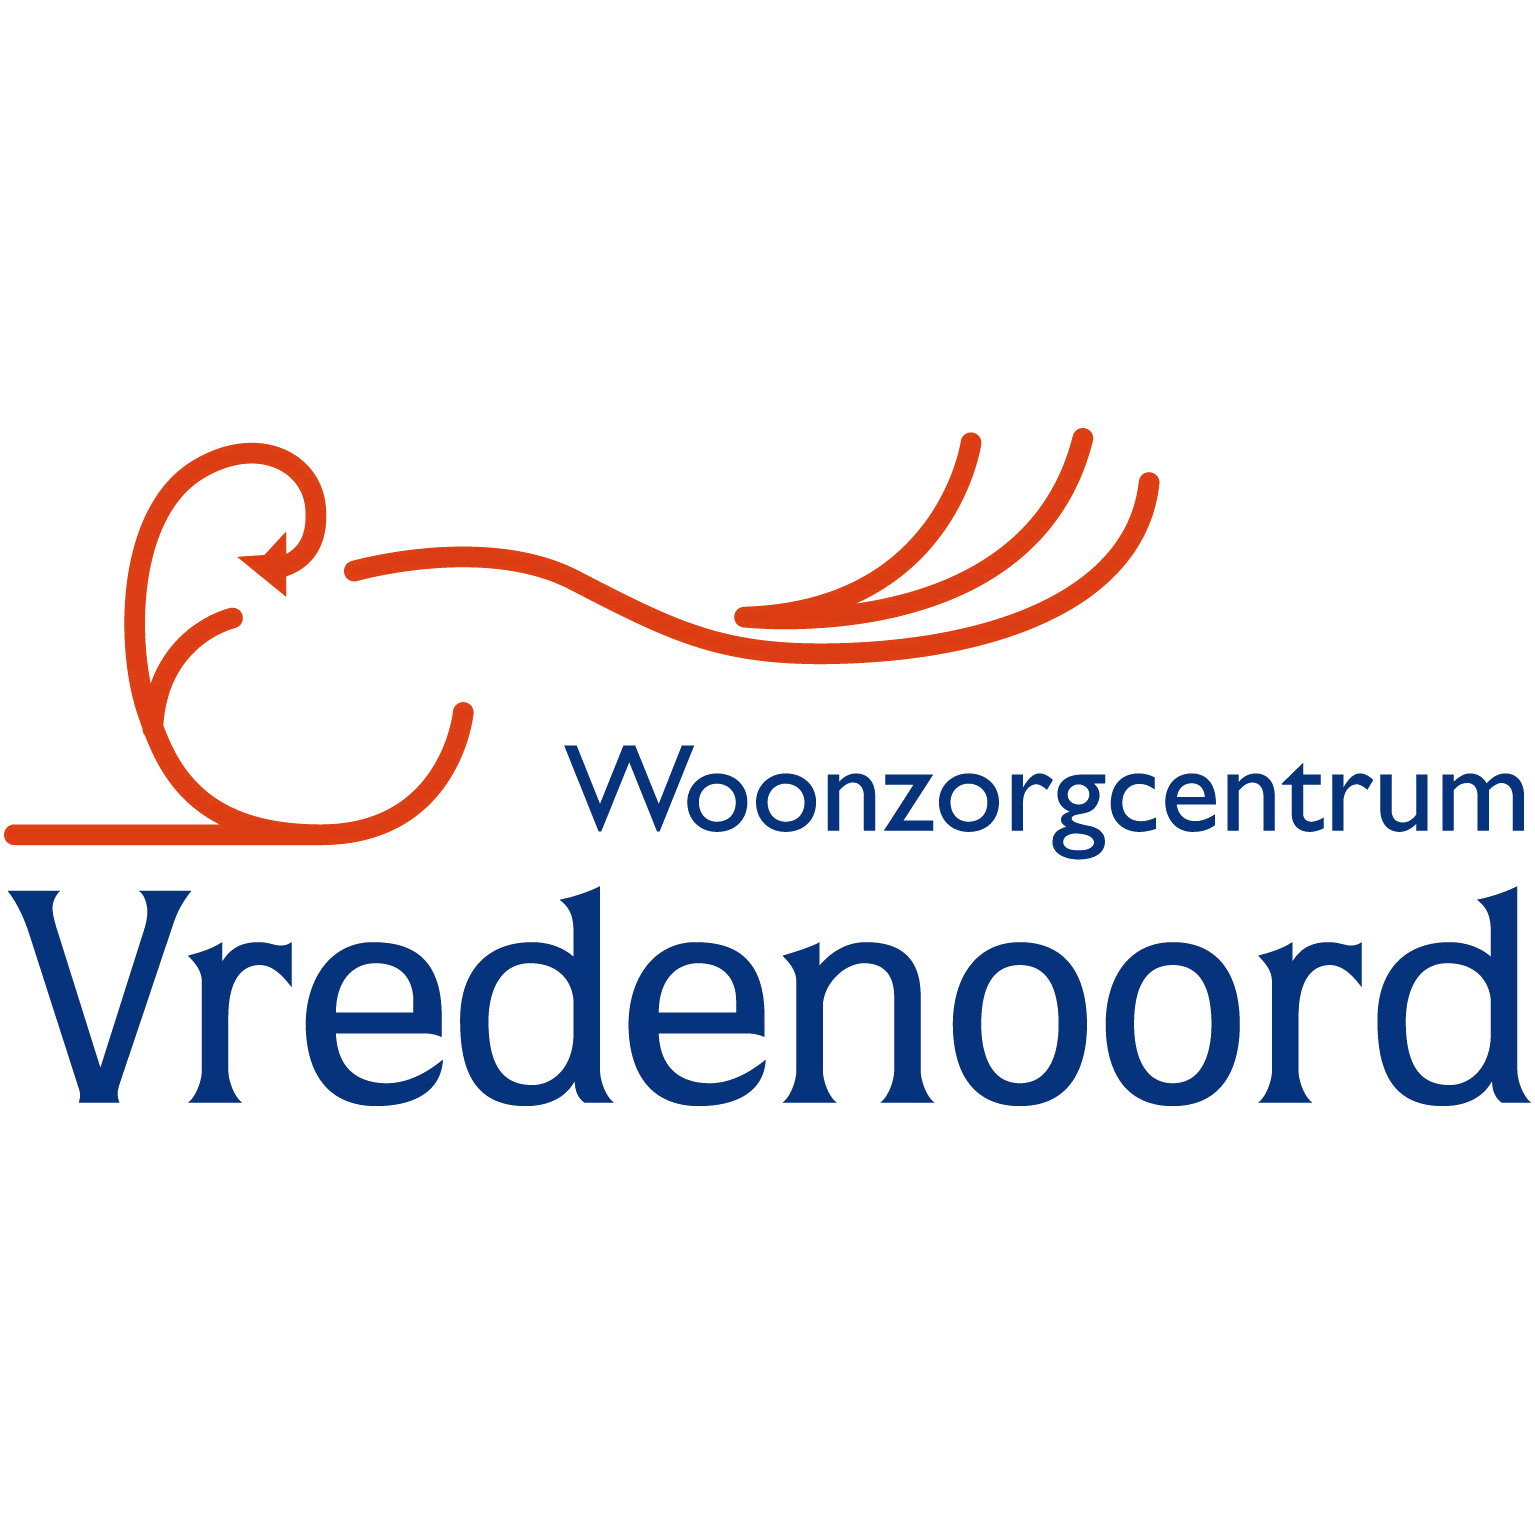 Vredenoord Woonzorgcentrum Logo